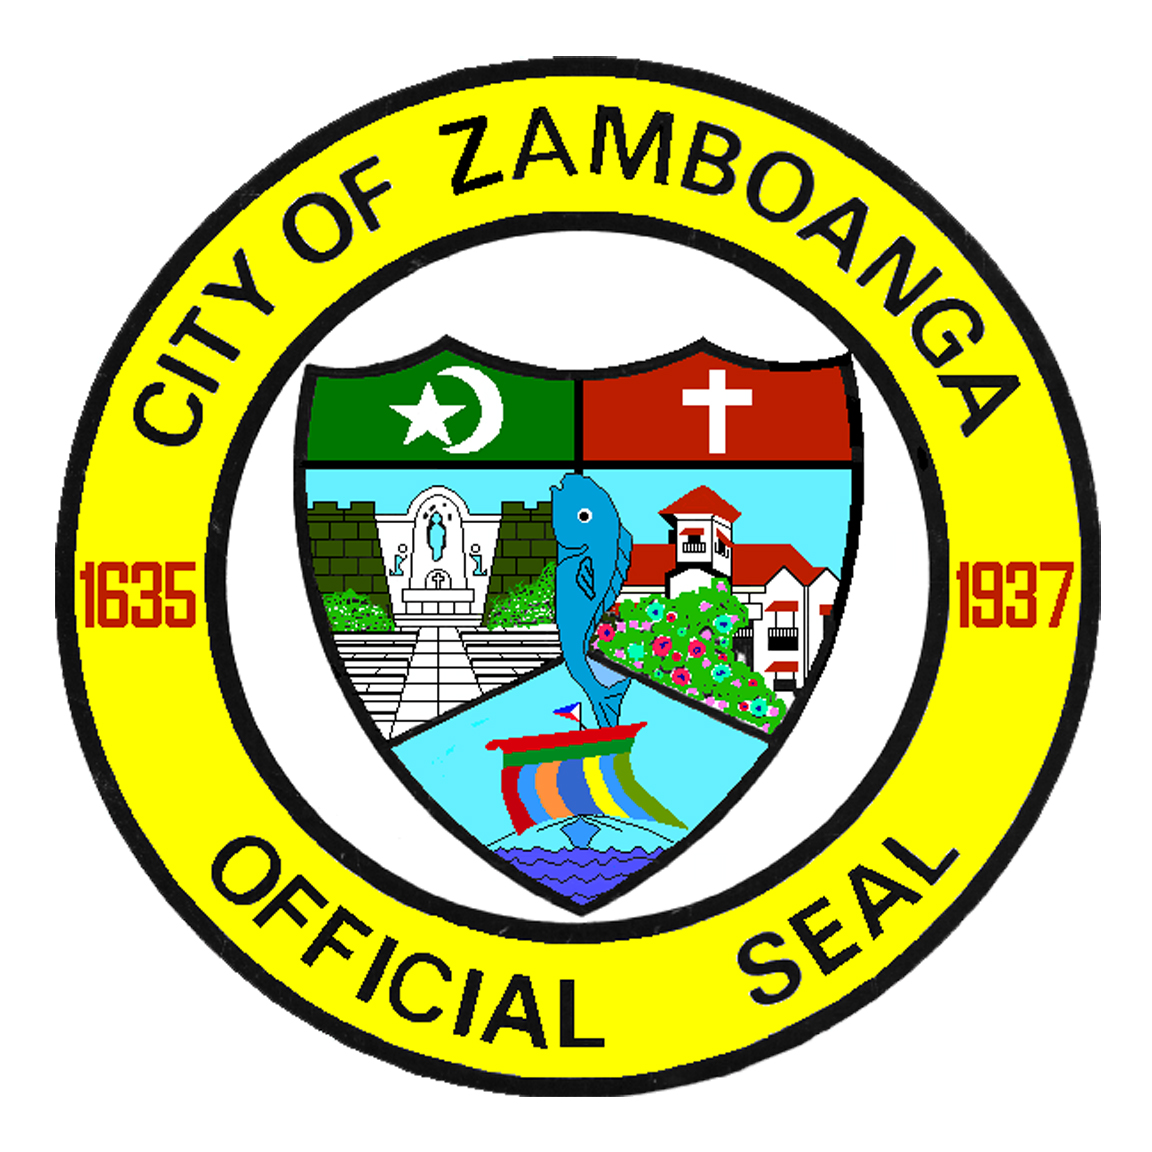 City of Zamboanga